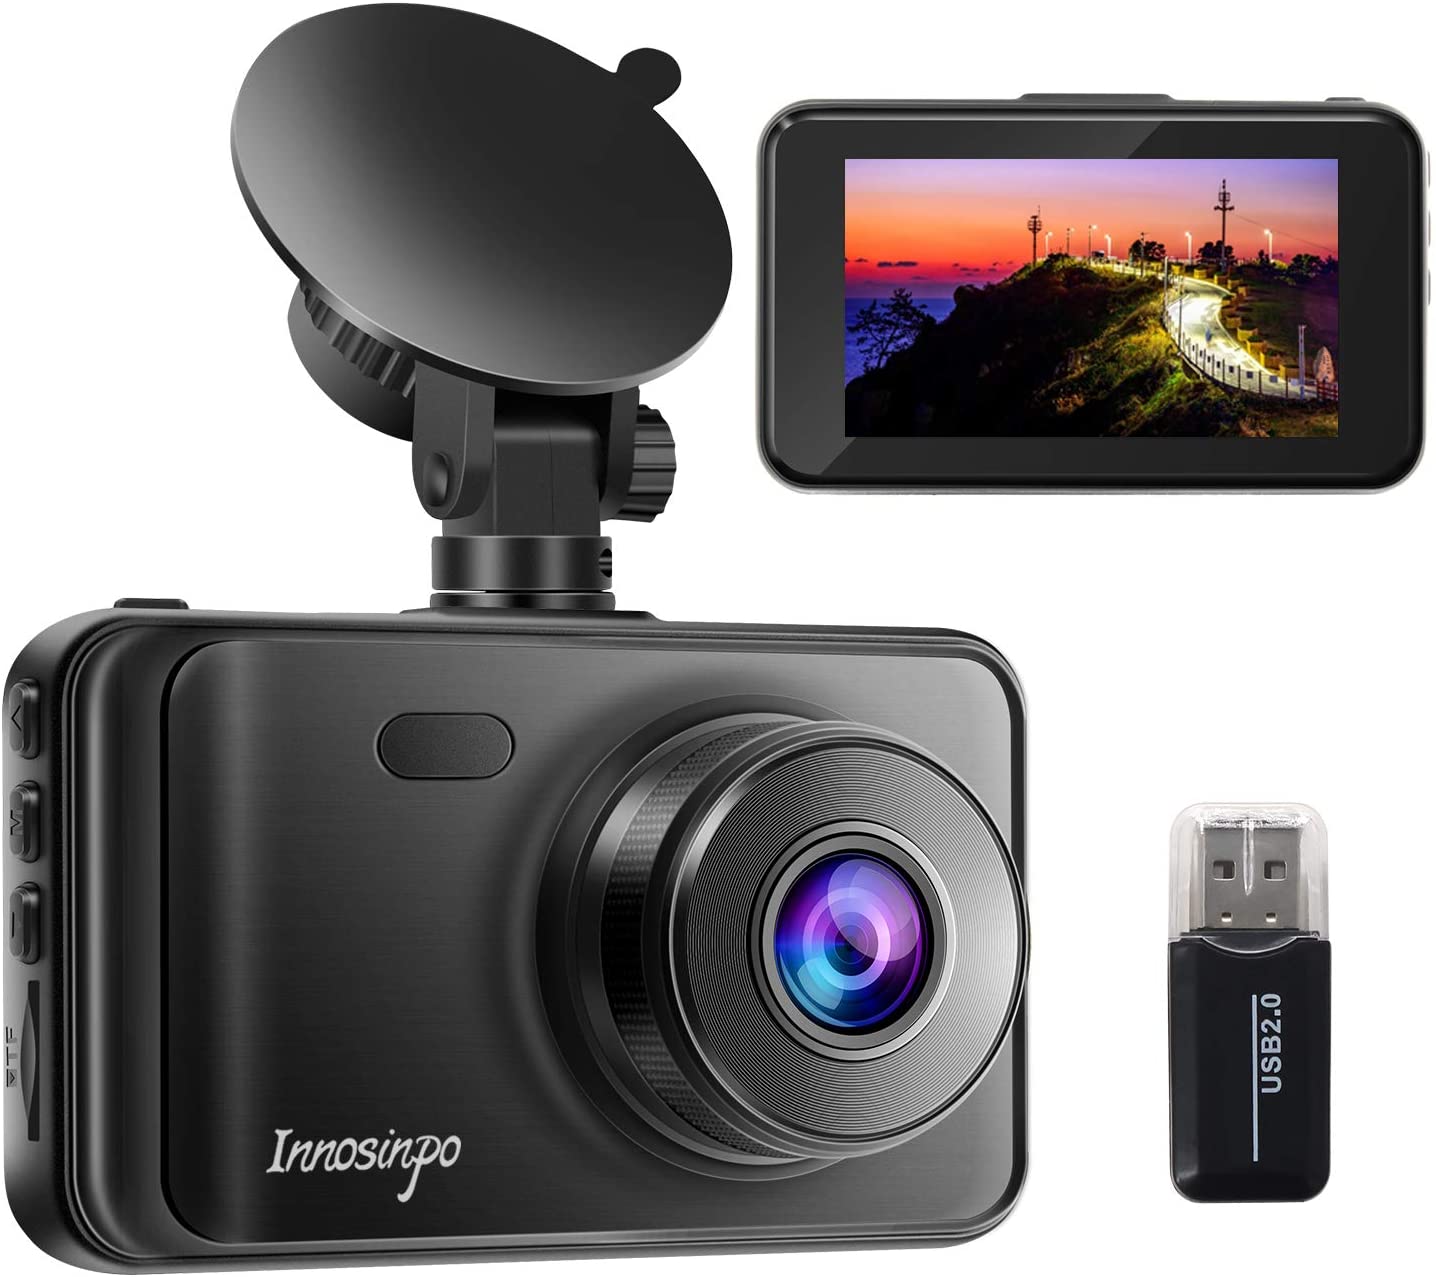 Innosinpo 1080P 3-Inch LCD Screen Dashboard Car Camera